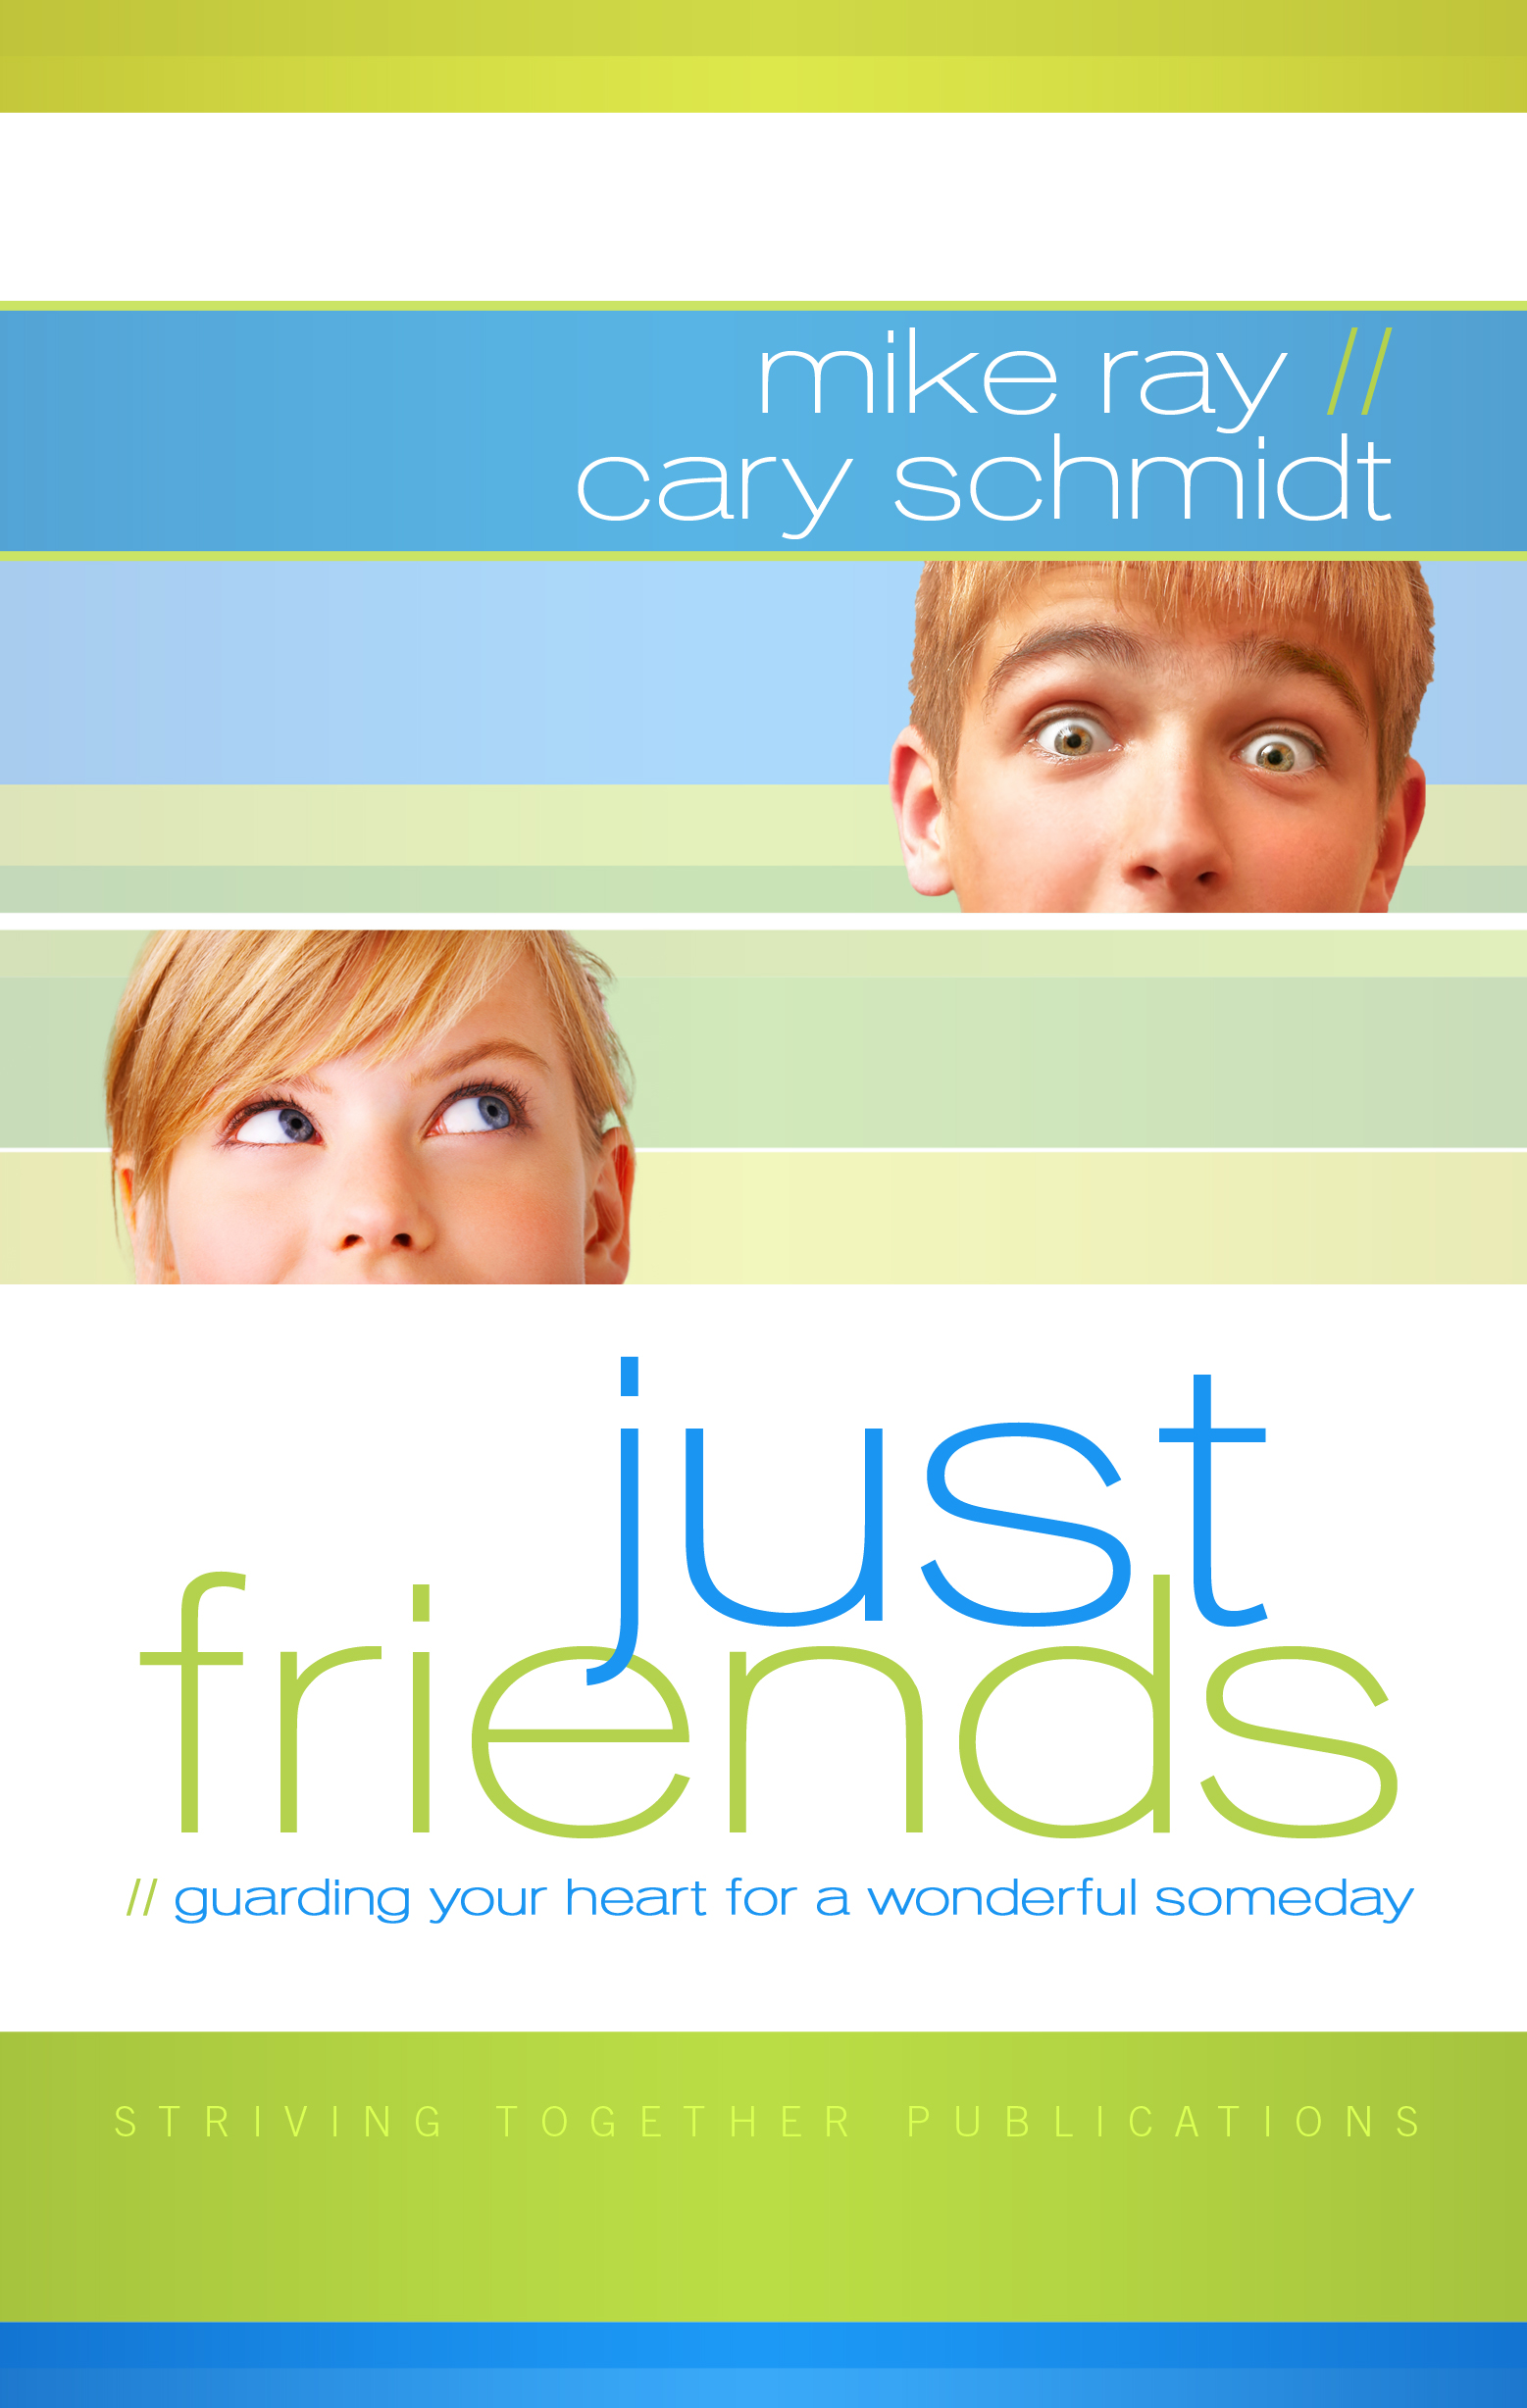 just-friends